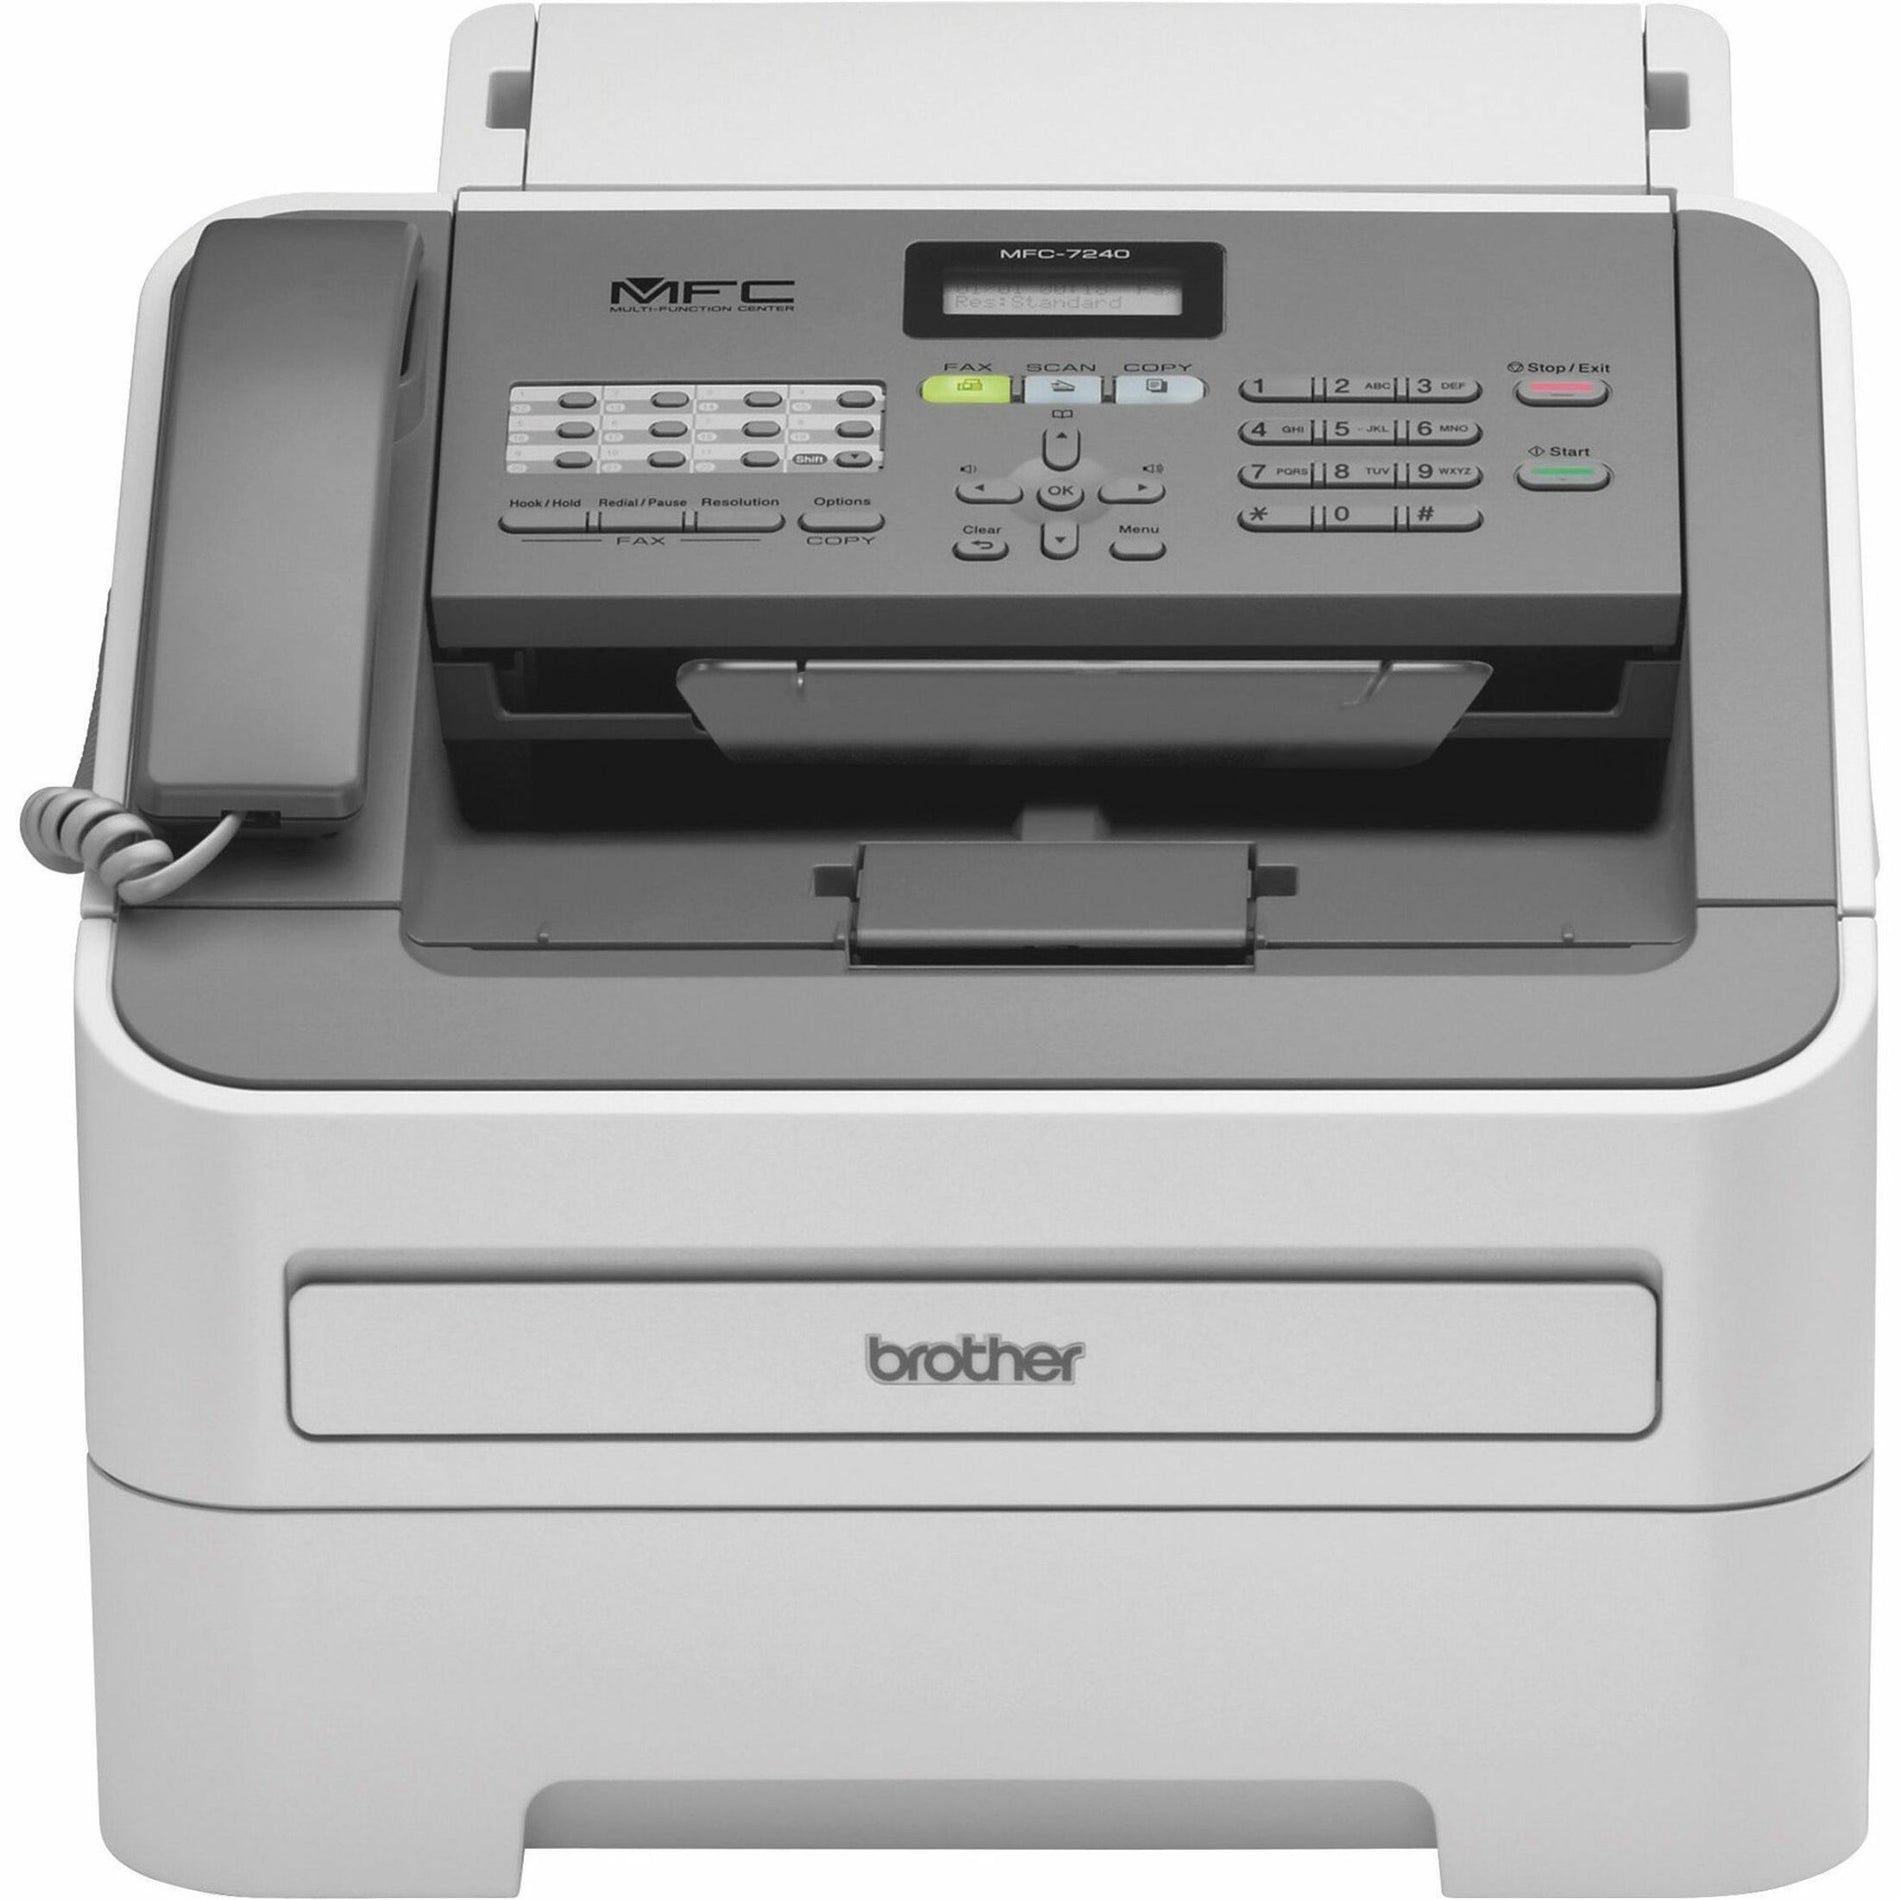 Brother Laser Multifunction Printer MFC-7240 Monochrome Black, Fax, Copier, Scanner, USB 2.0